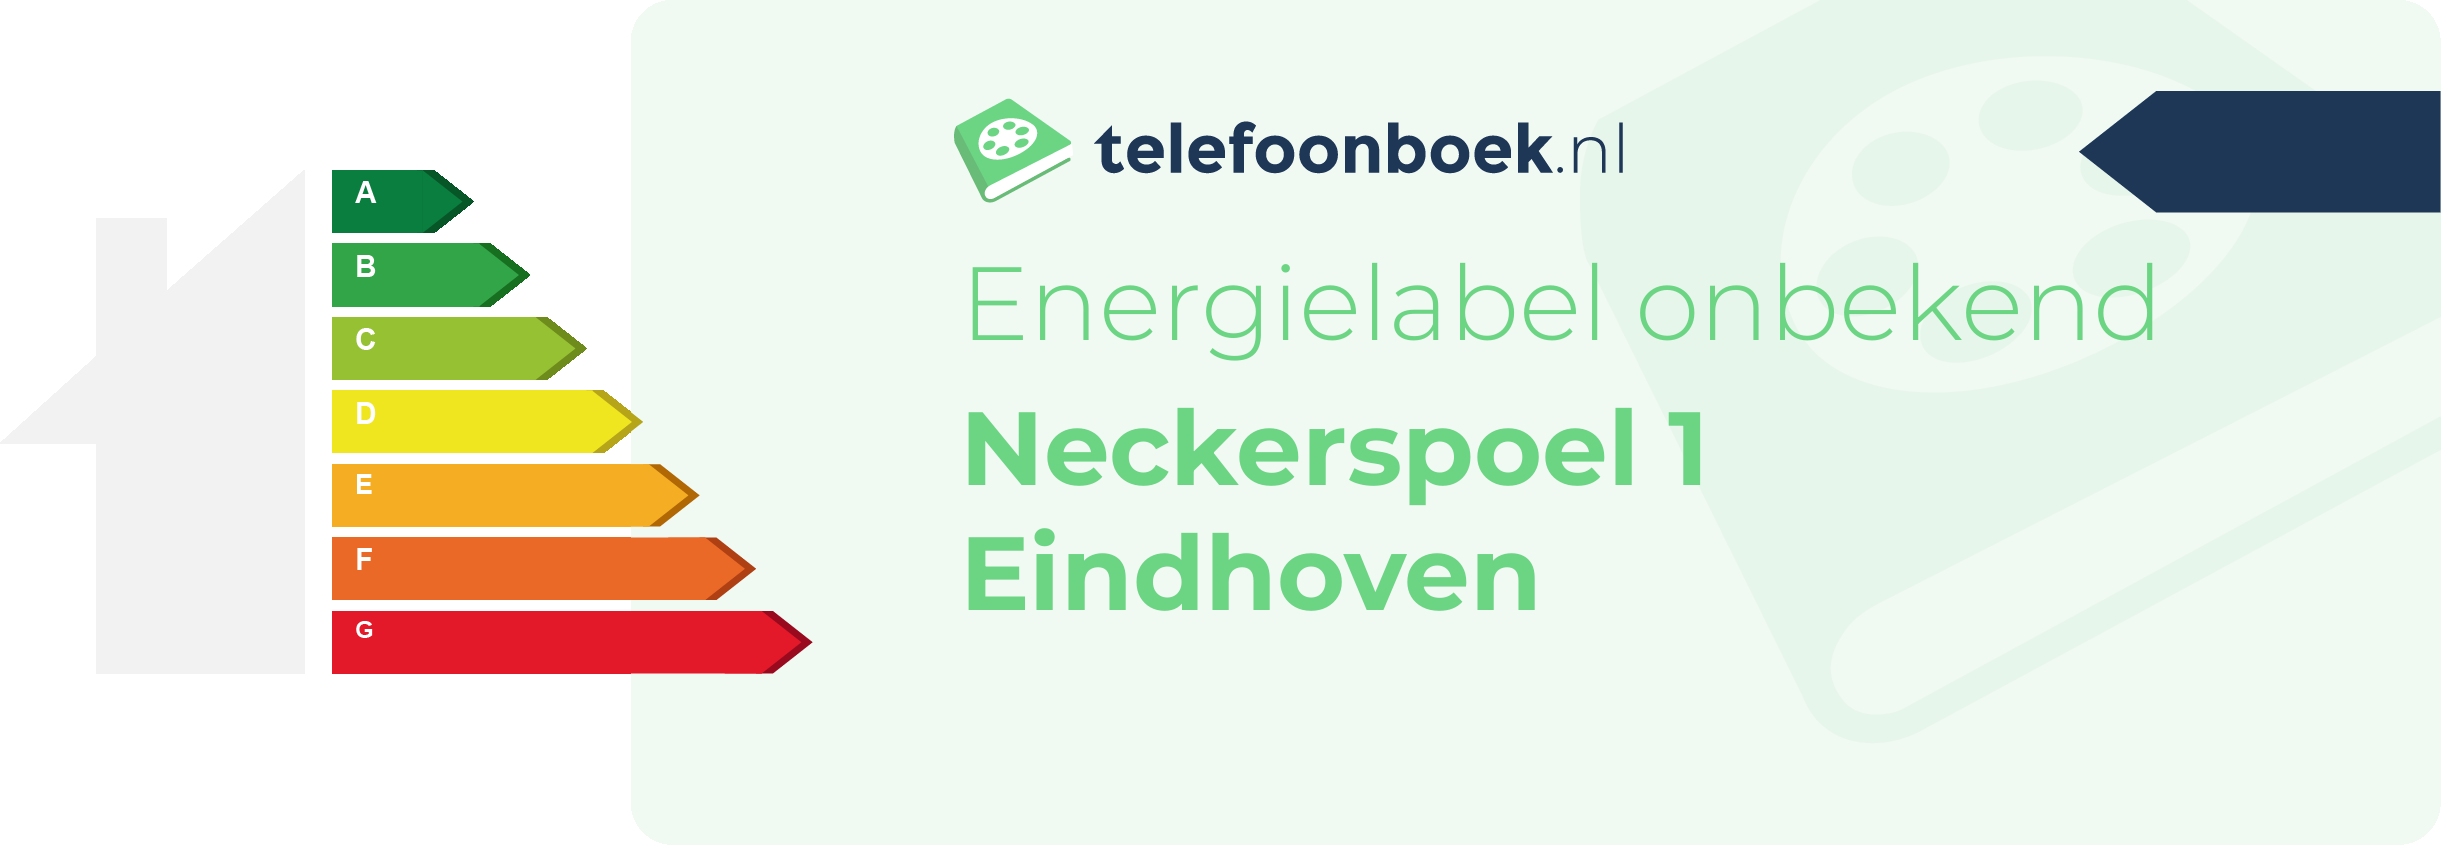 Energielabel Neckerspoel 1 Eindhoven